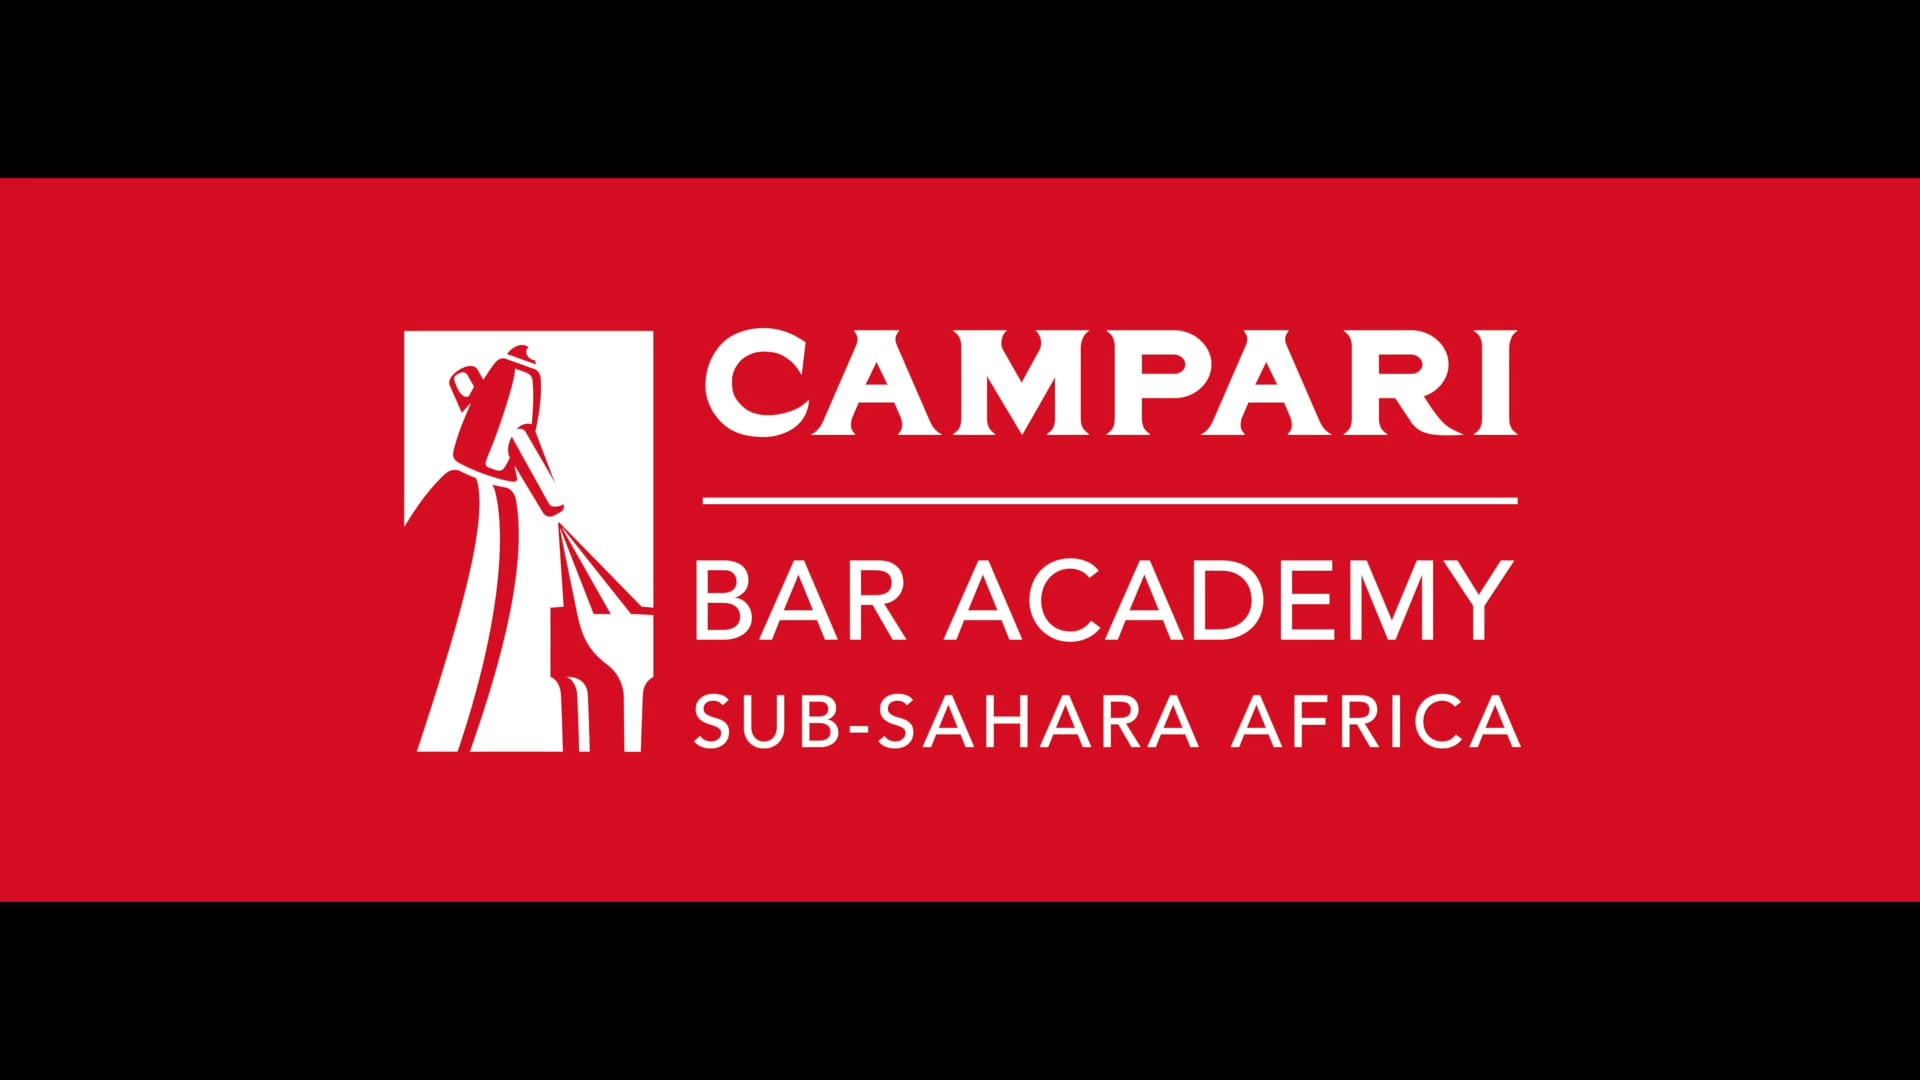 Campari - 2018 Bartenders year - Video 1